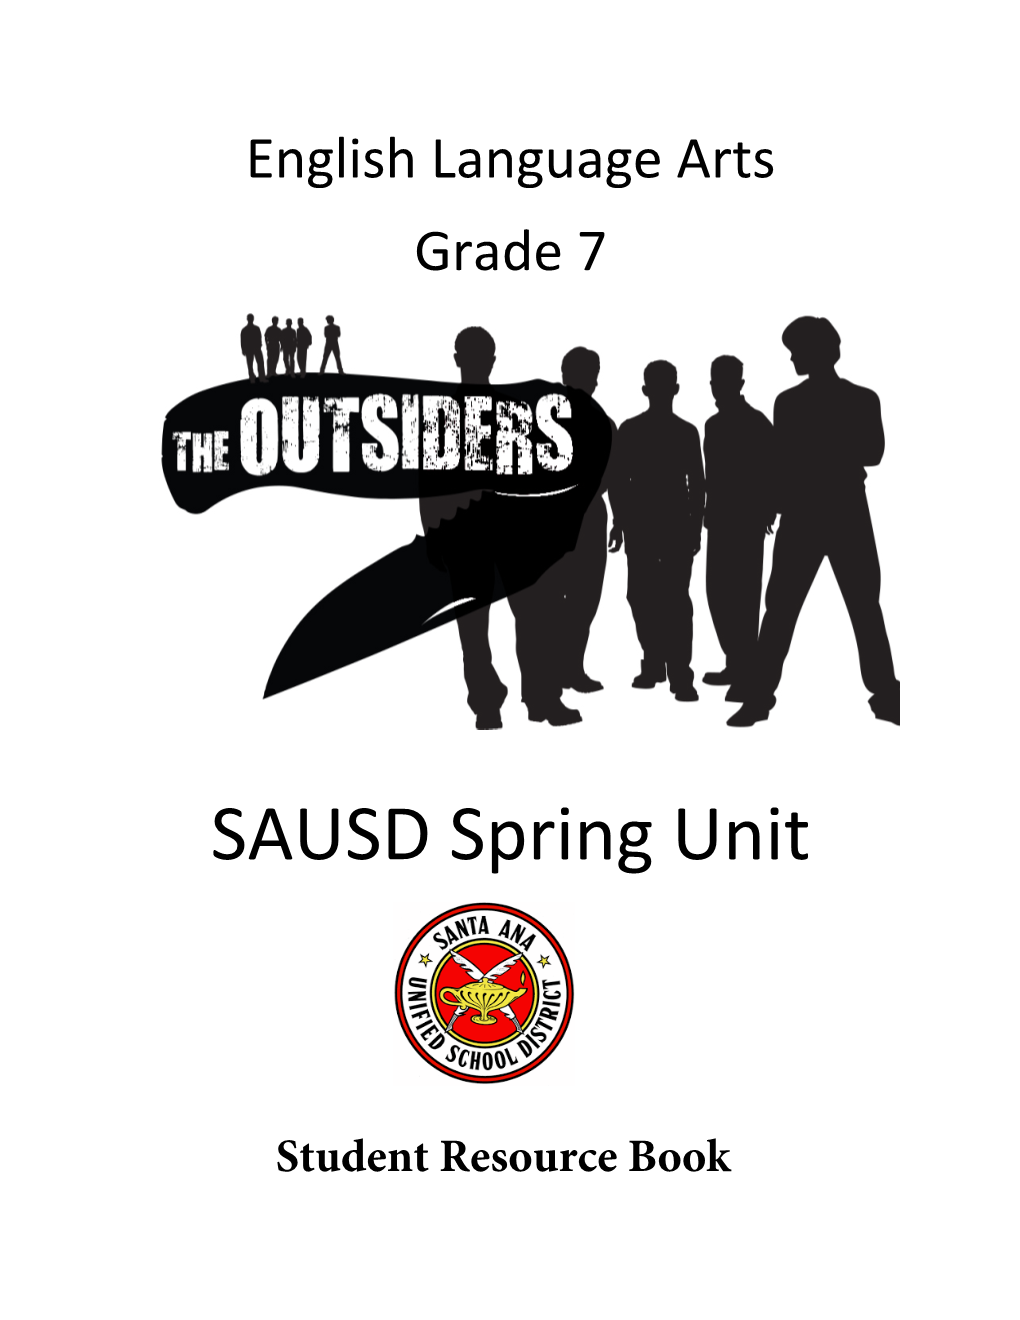 SAUSD Spring Unit